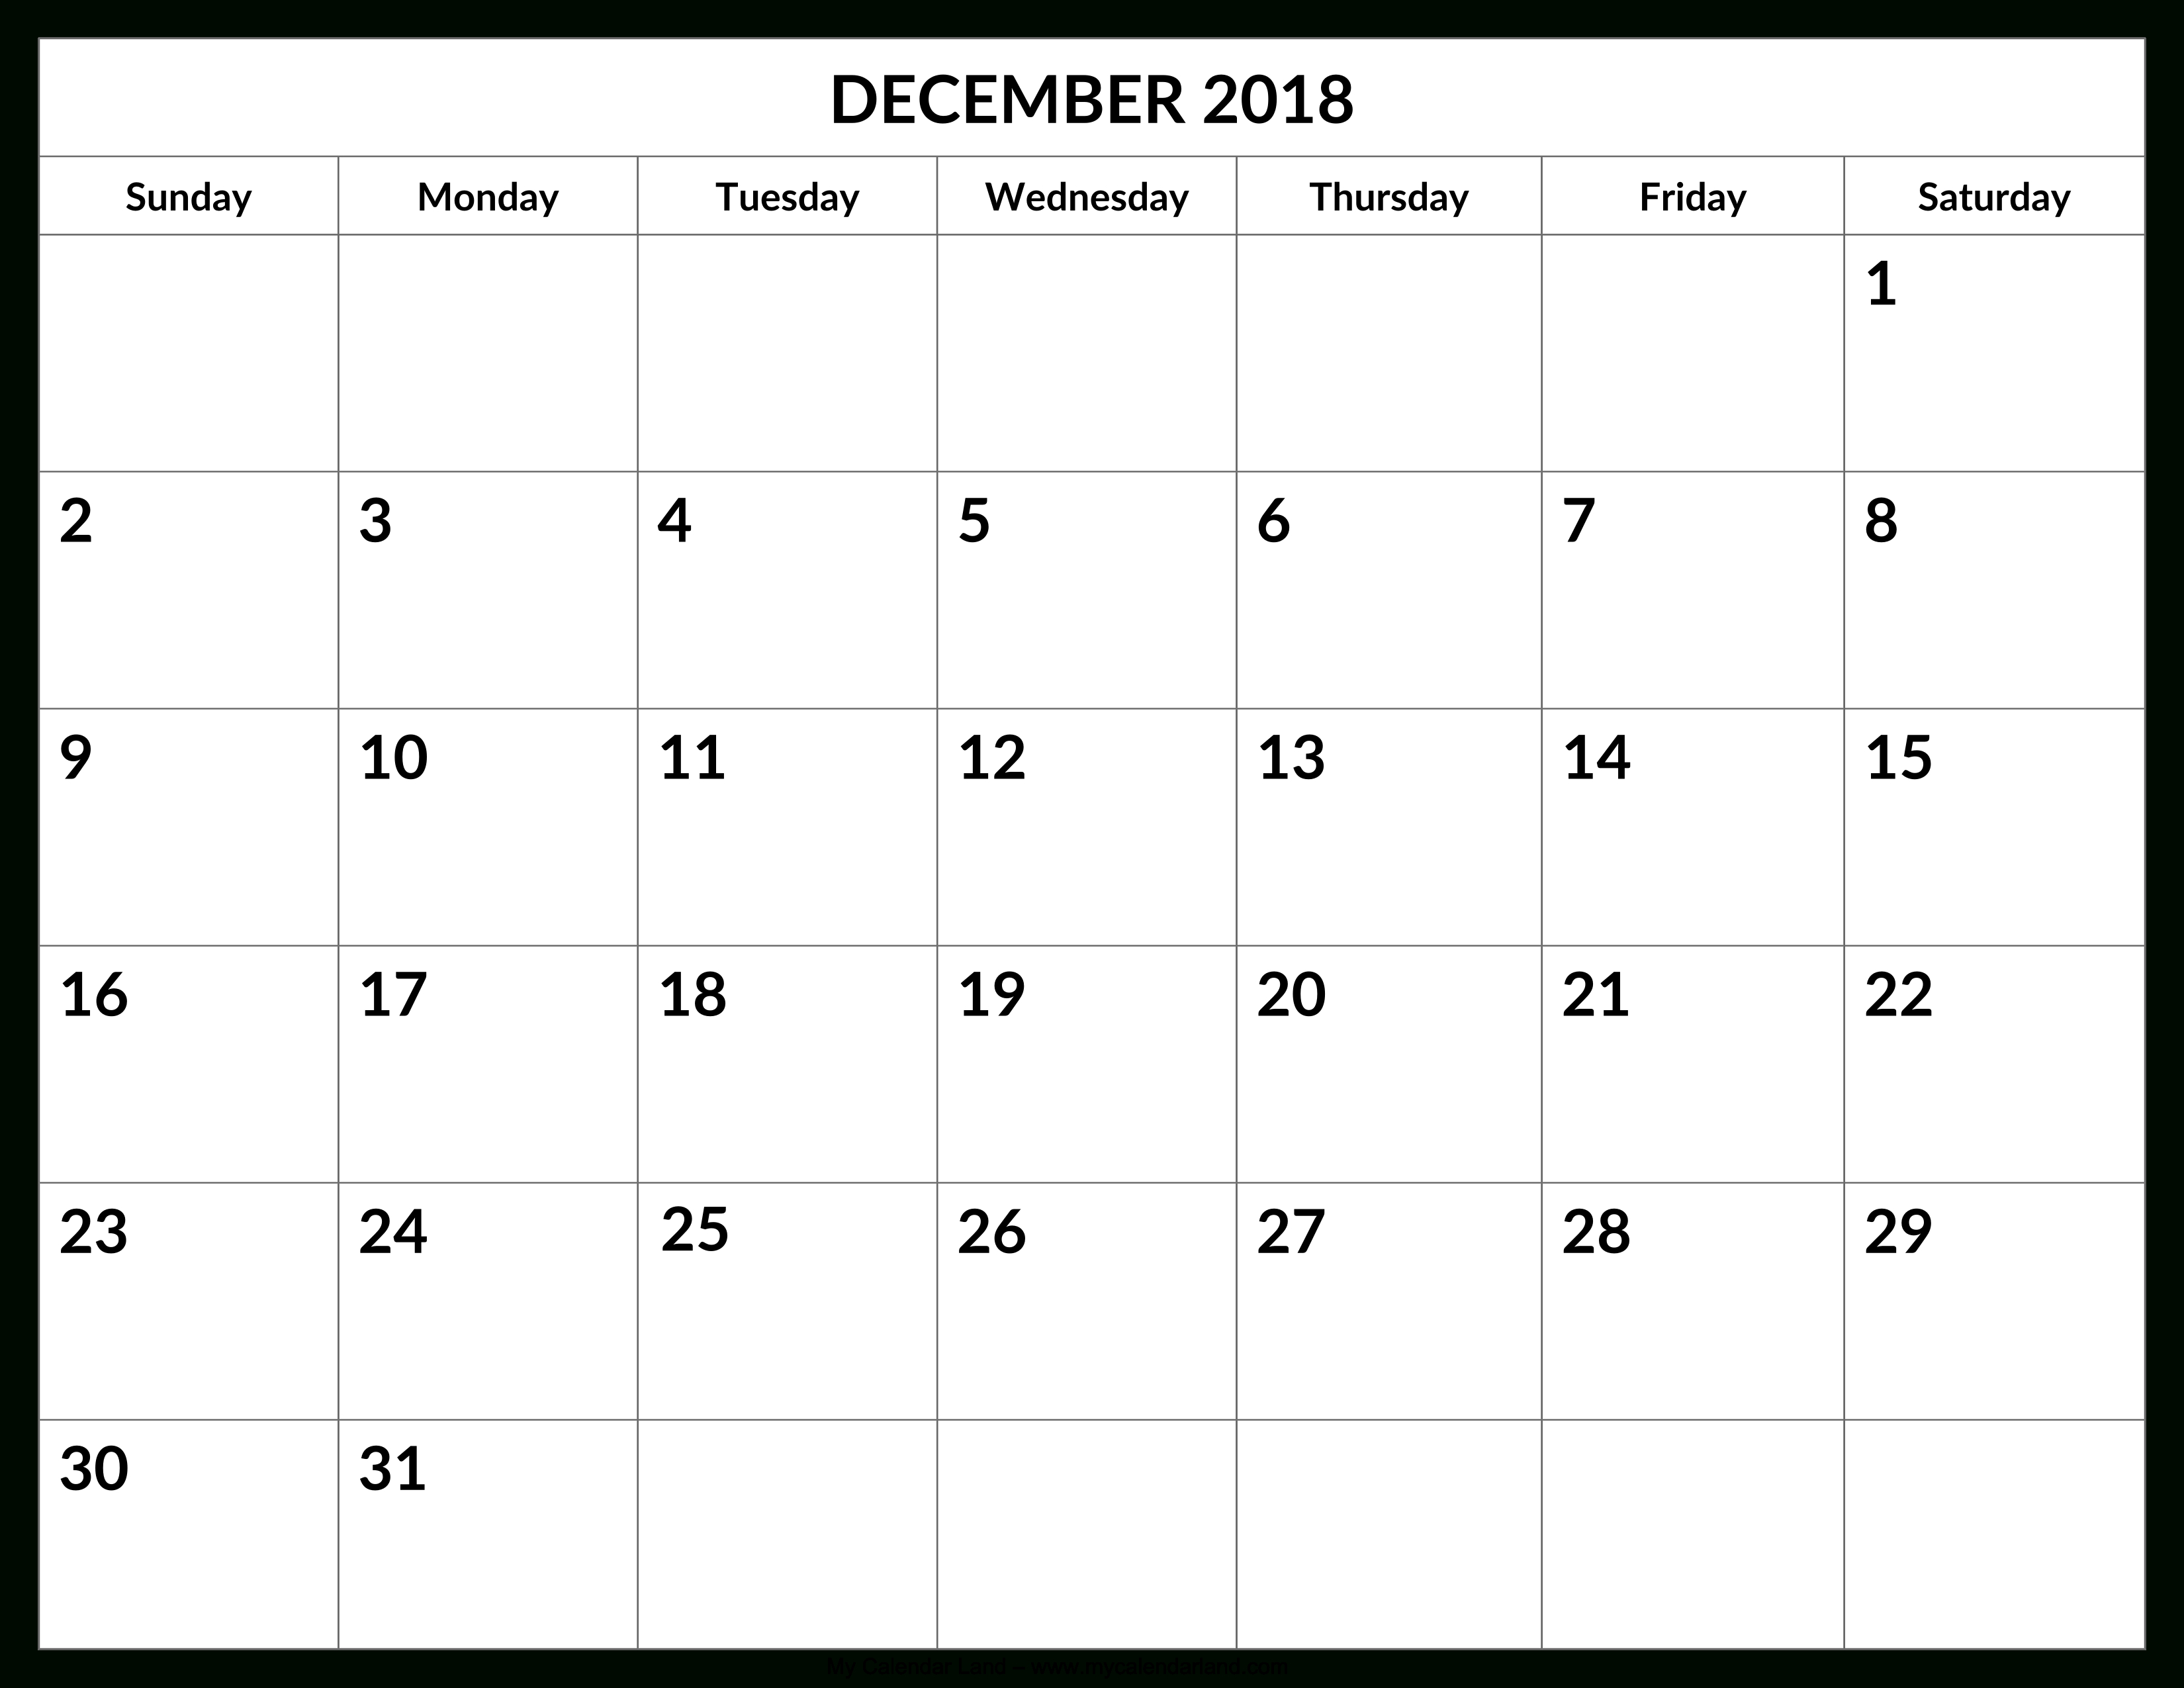 December 2018 Calendar - My Calendar Land